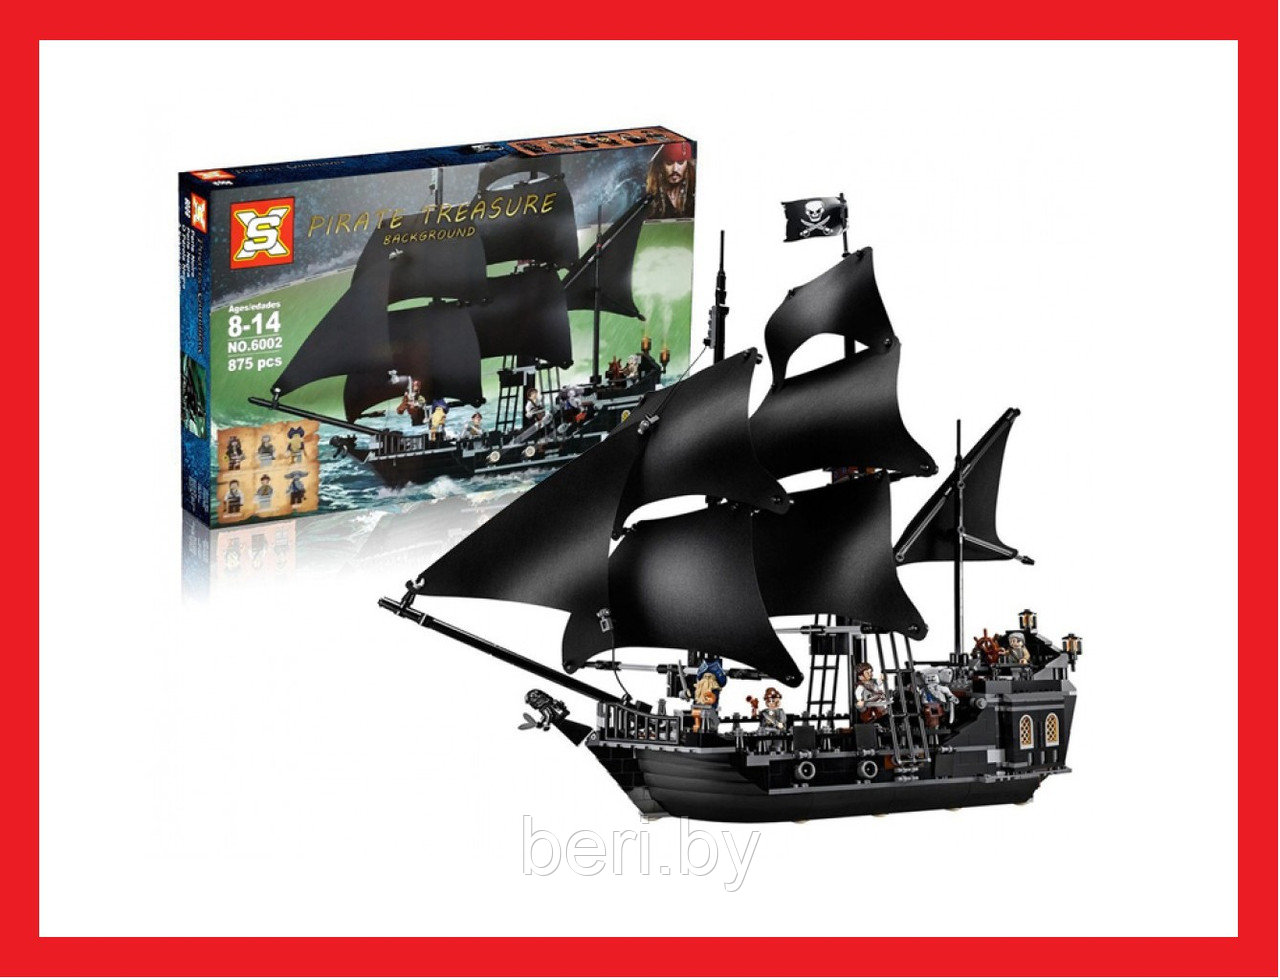 6002 Конструктор SX Pirate Treasure Черная жемчужина (Аналог Lego Pirates of the Caribbean 4184), 875 дет